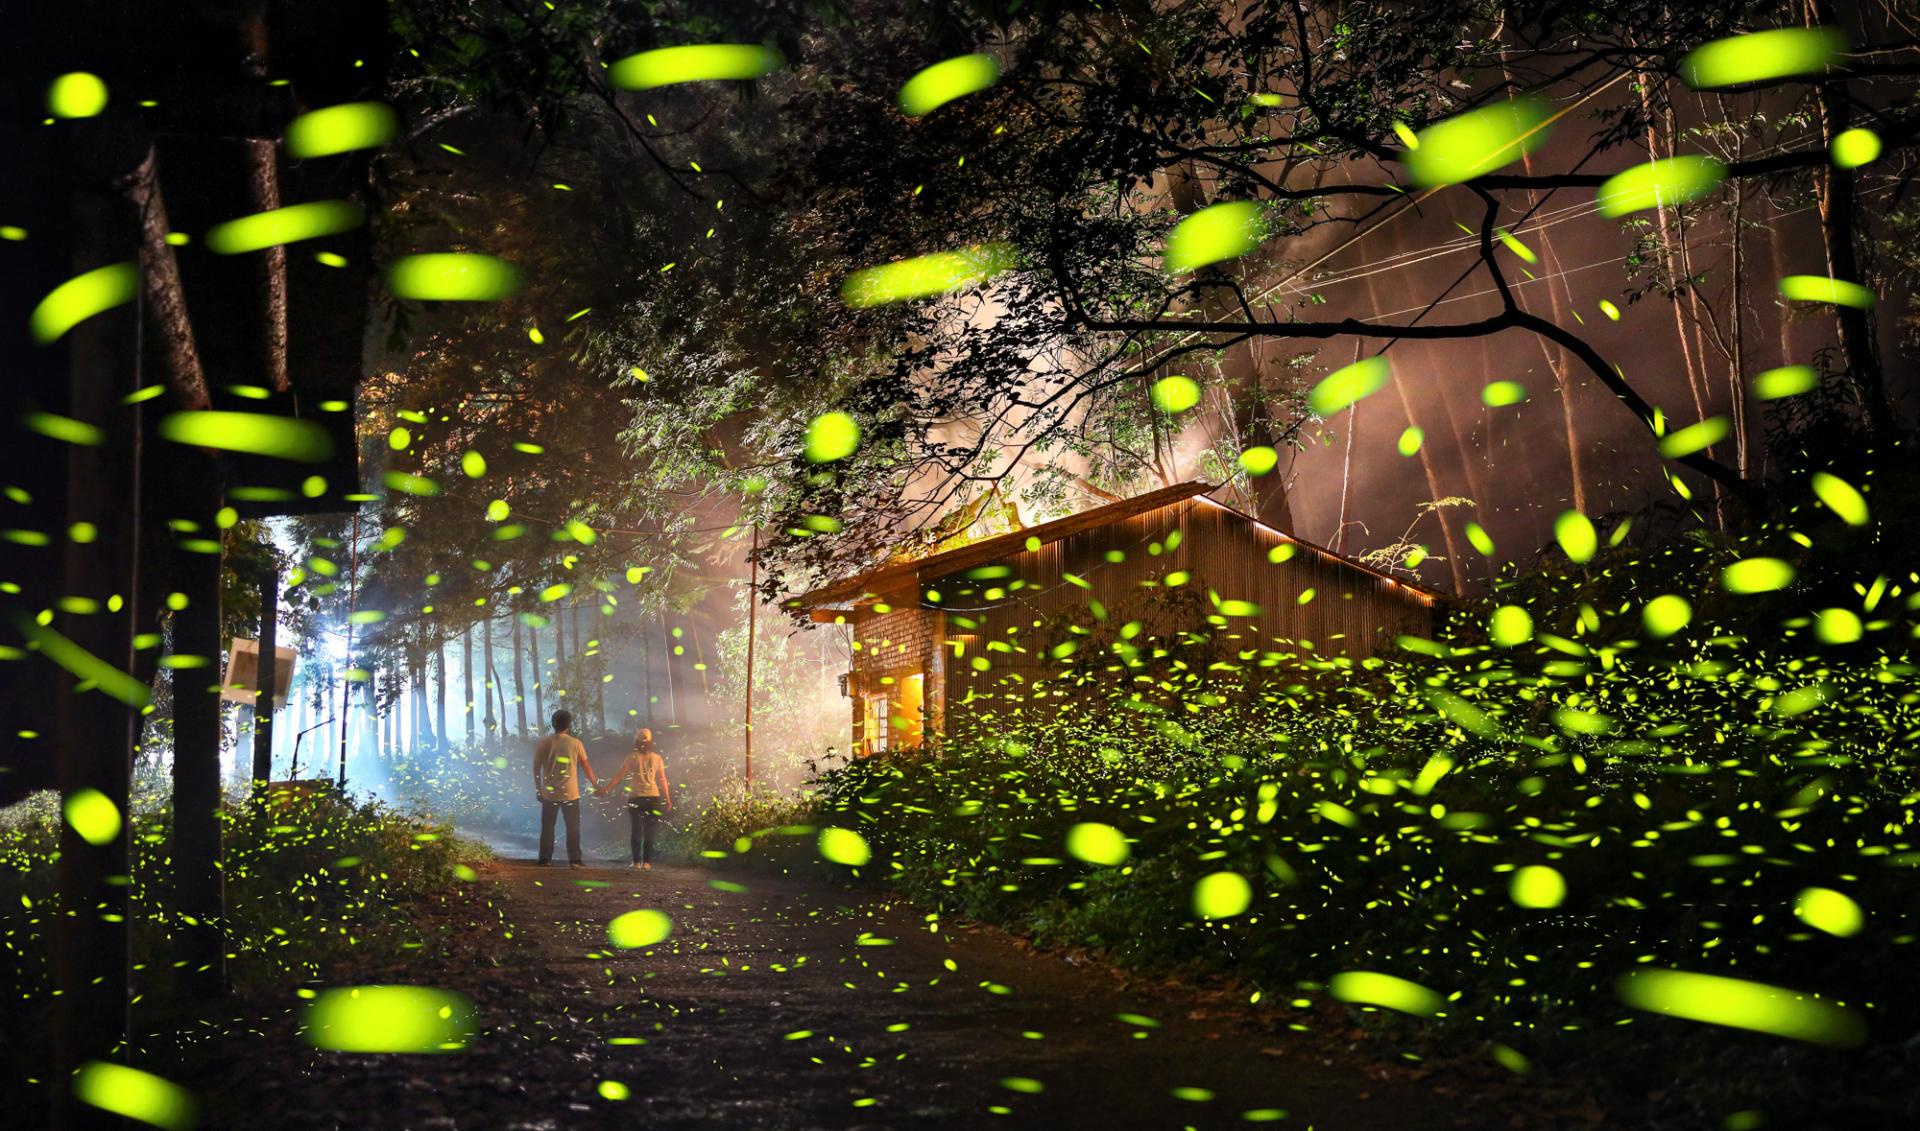 New York Photography Awards Winner - Travel with Fireflies